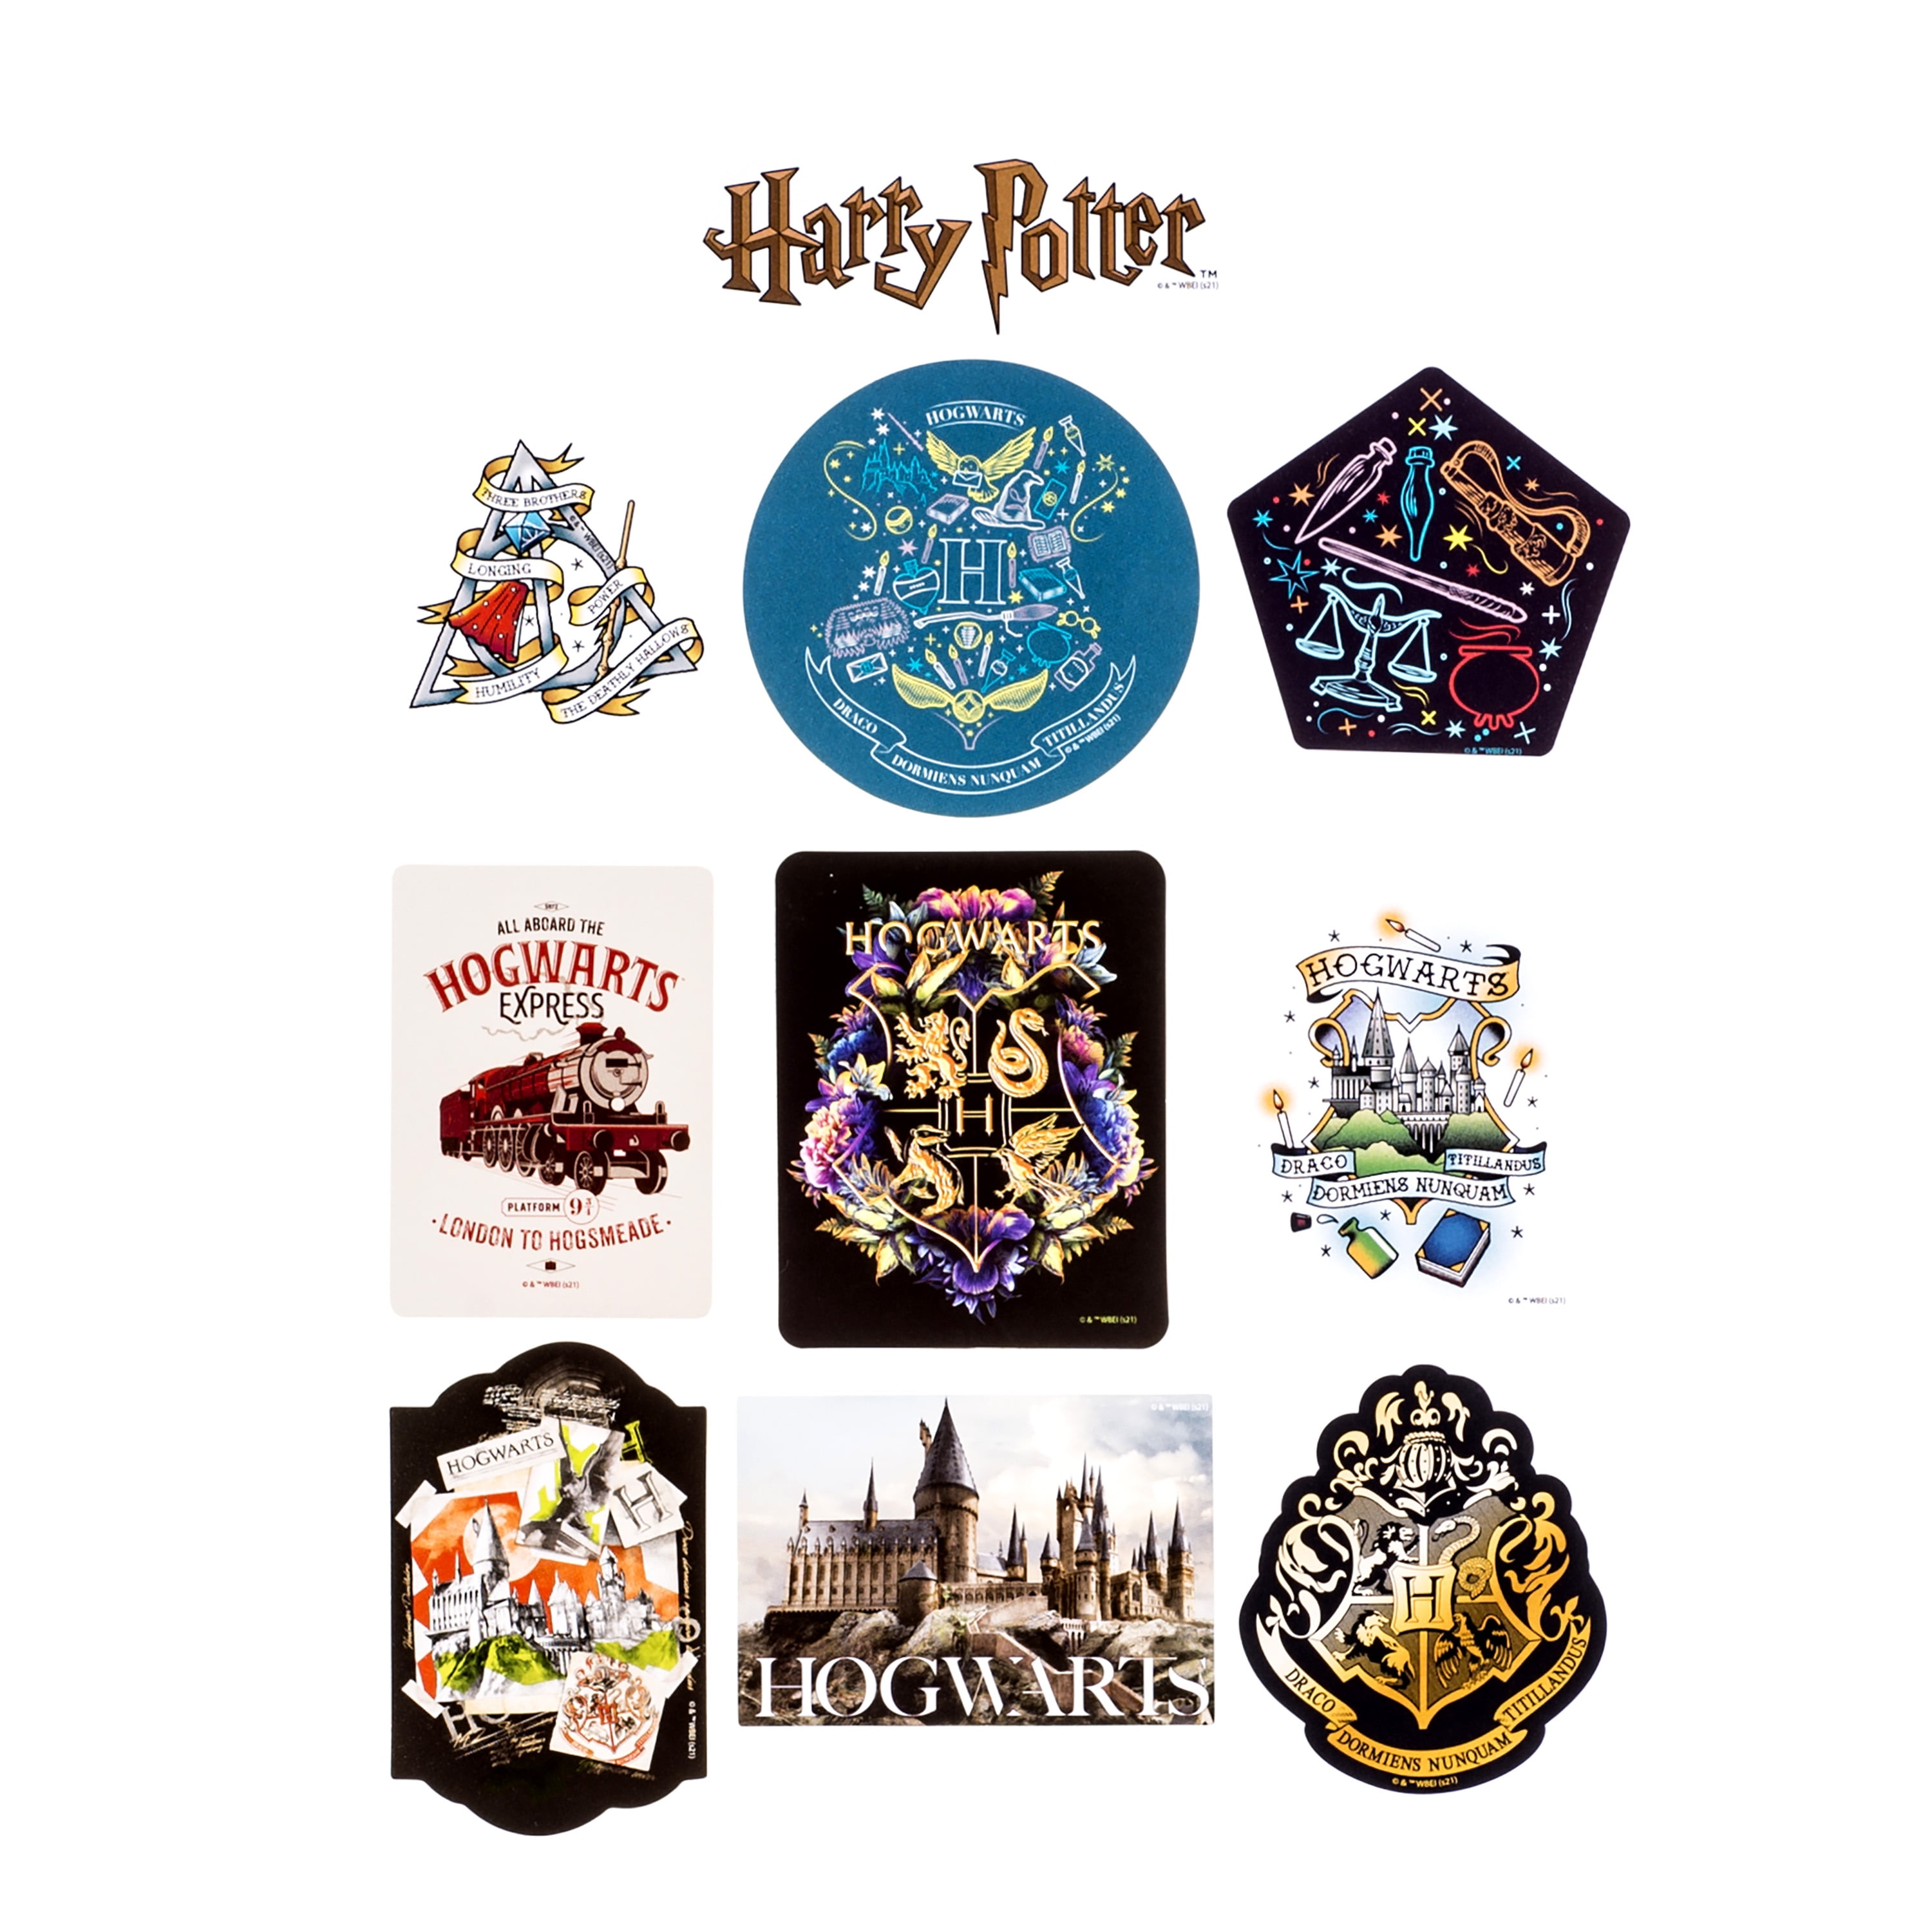 Harry Potter Gadget Decals Symbols Cinereplicas